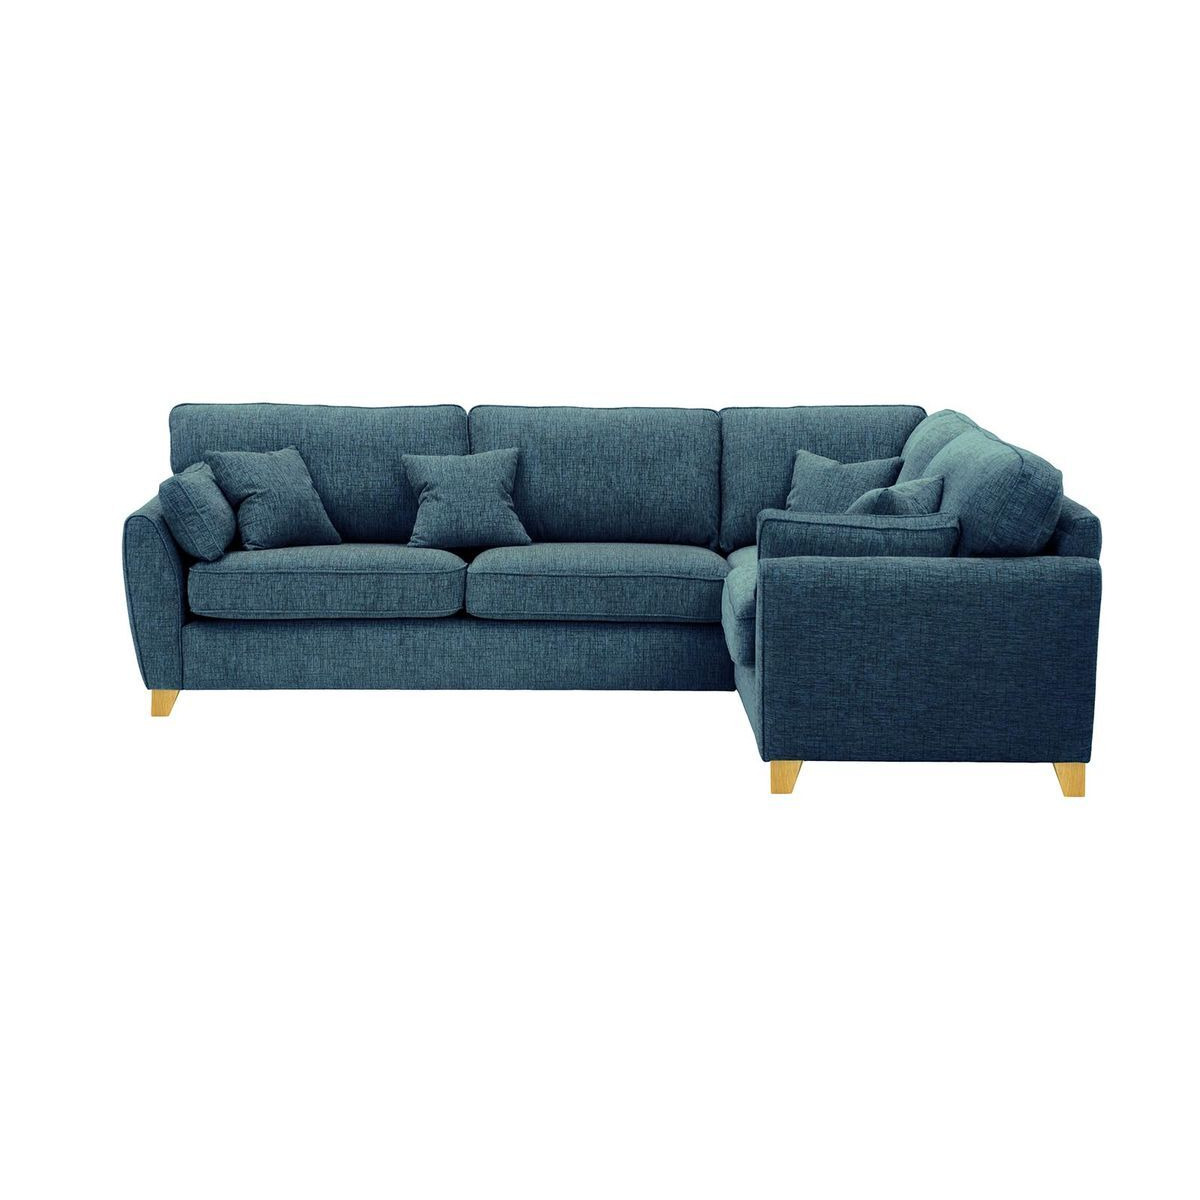 James Large Right Corner Sofa, teal, Leg colour: like oak - image 1